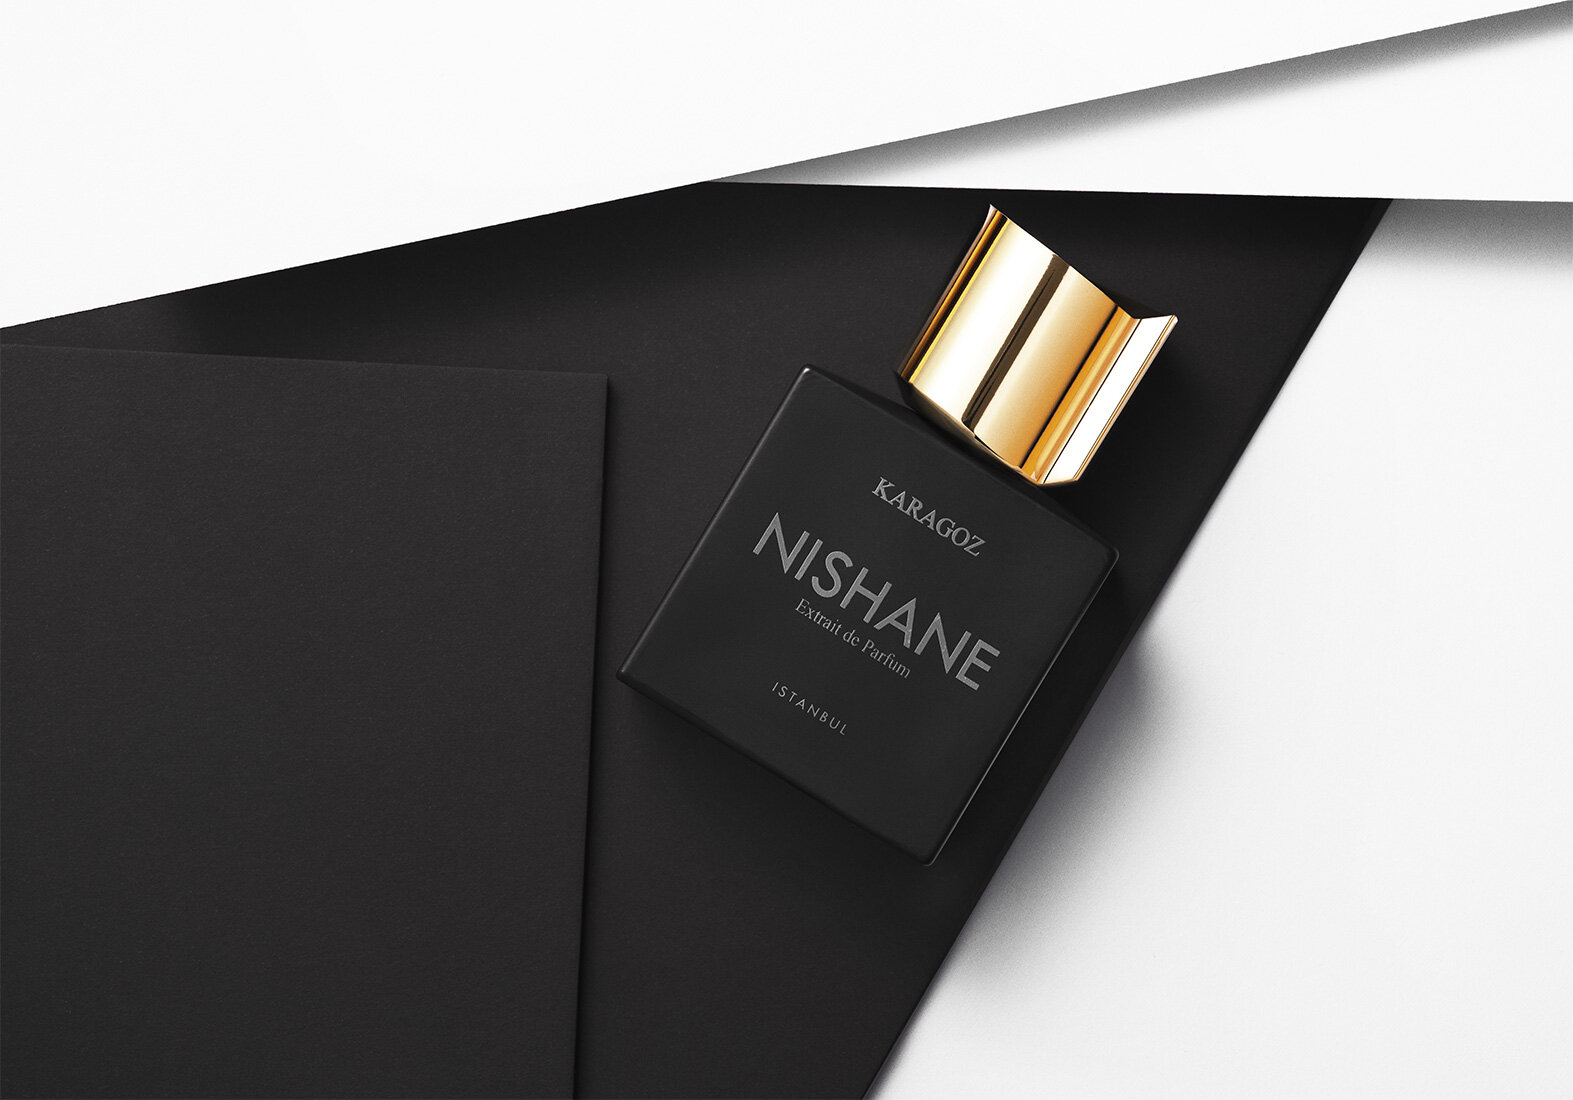   Nishane   Extrait de Parfum      